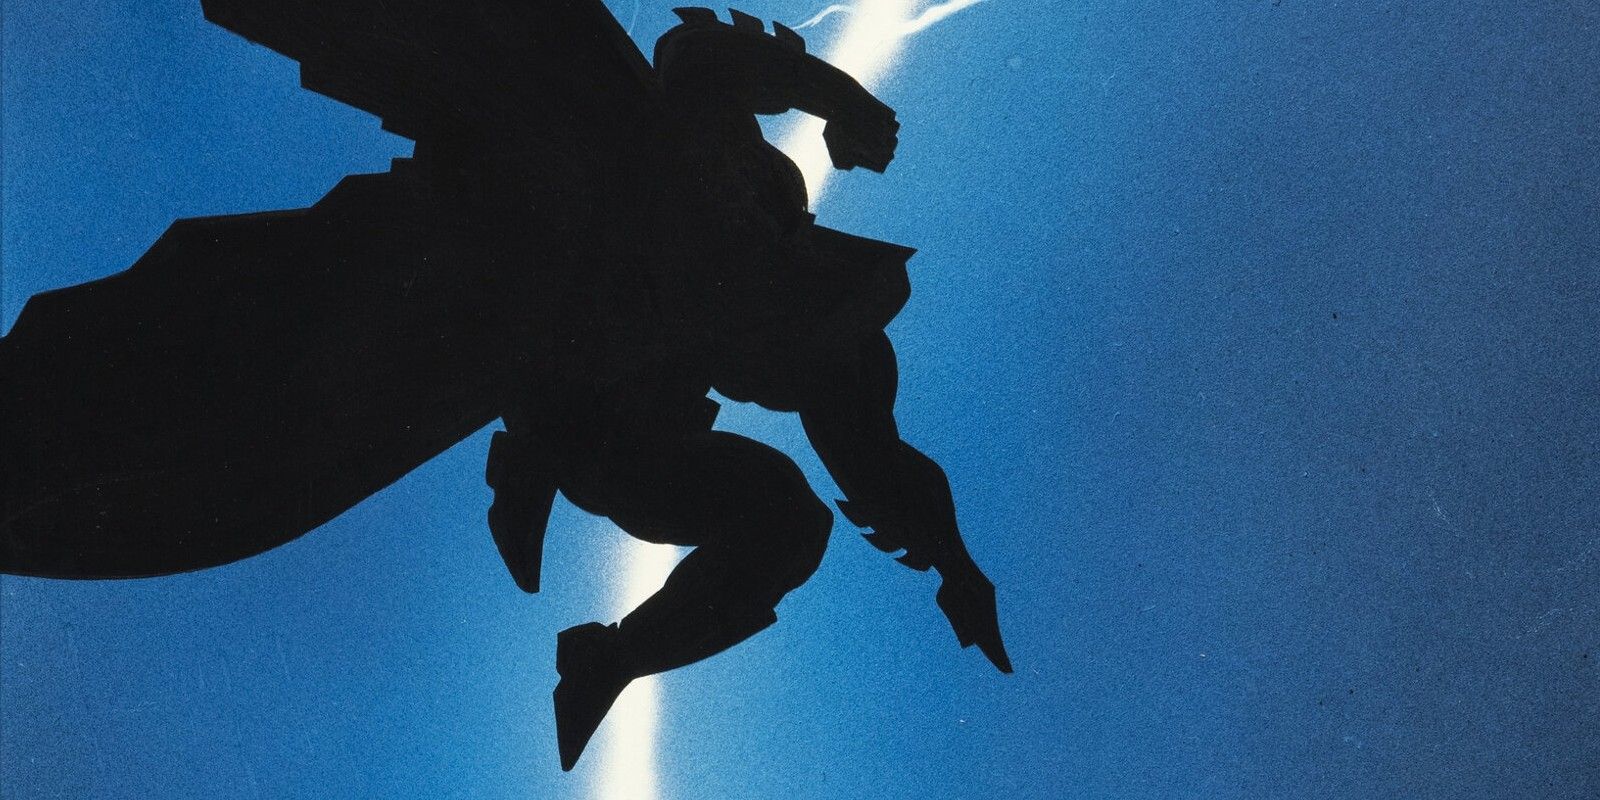 Batman in shadow jumping through the sky